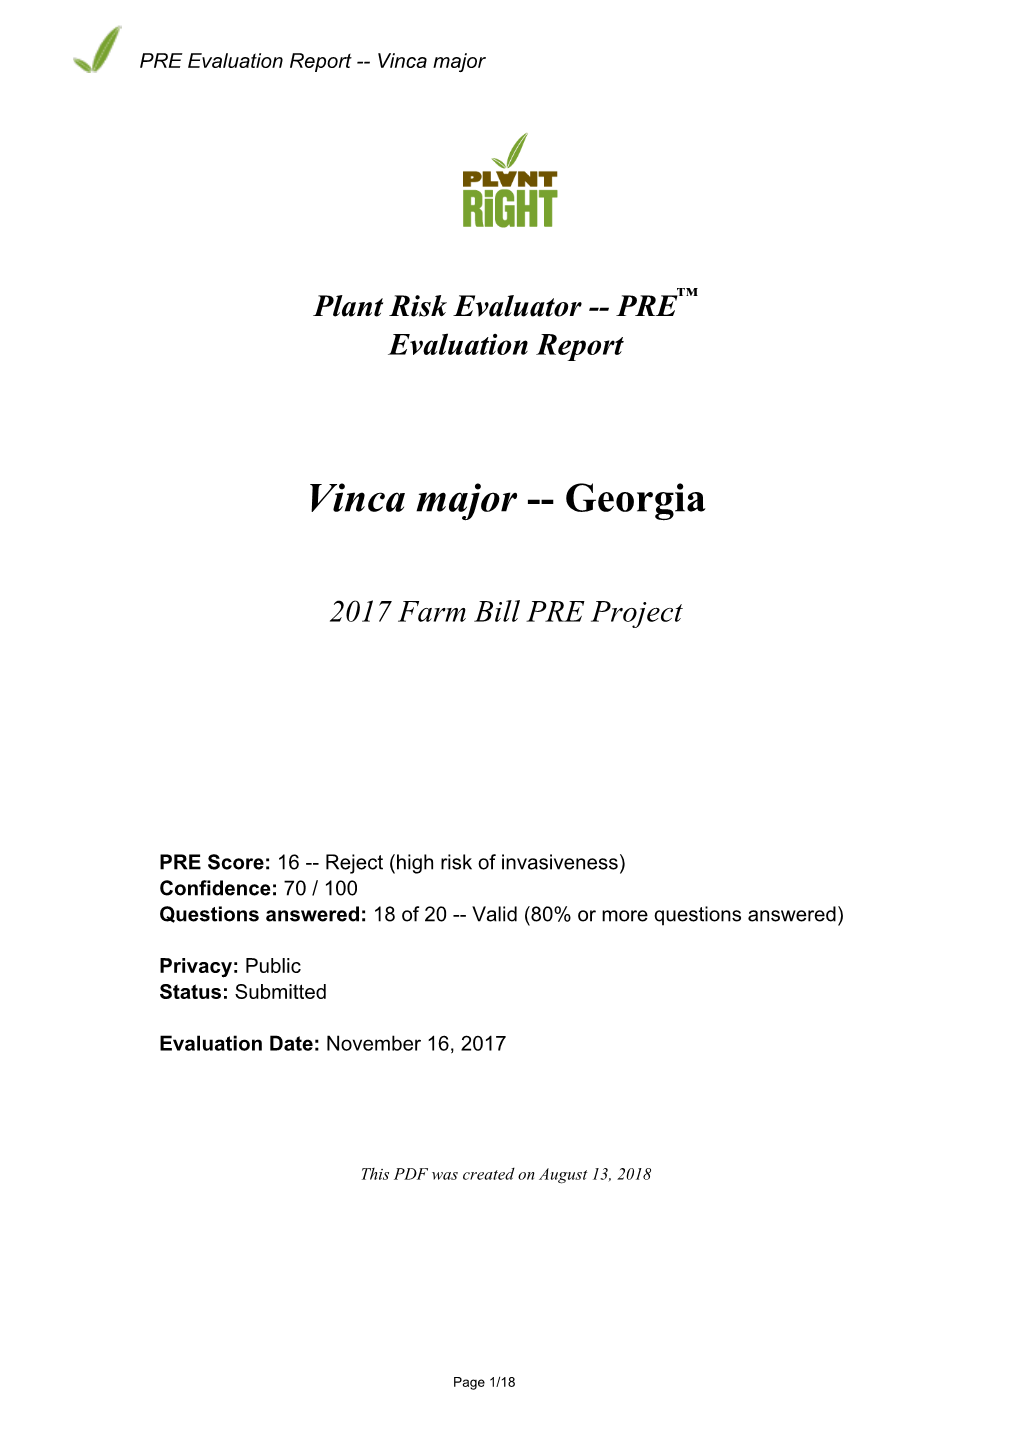 PRE Evaluation Report for Vinca Major